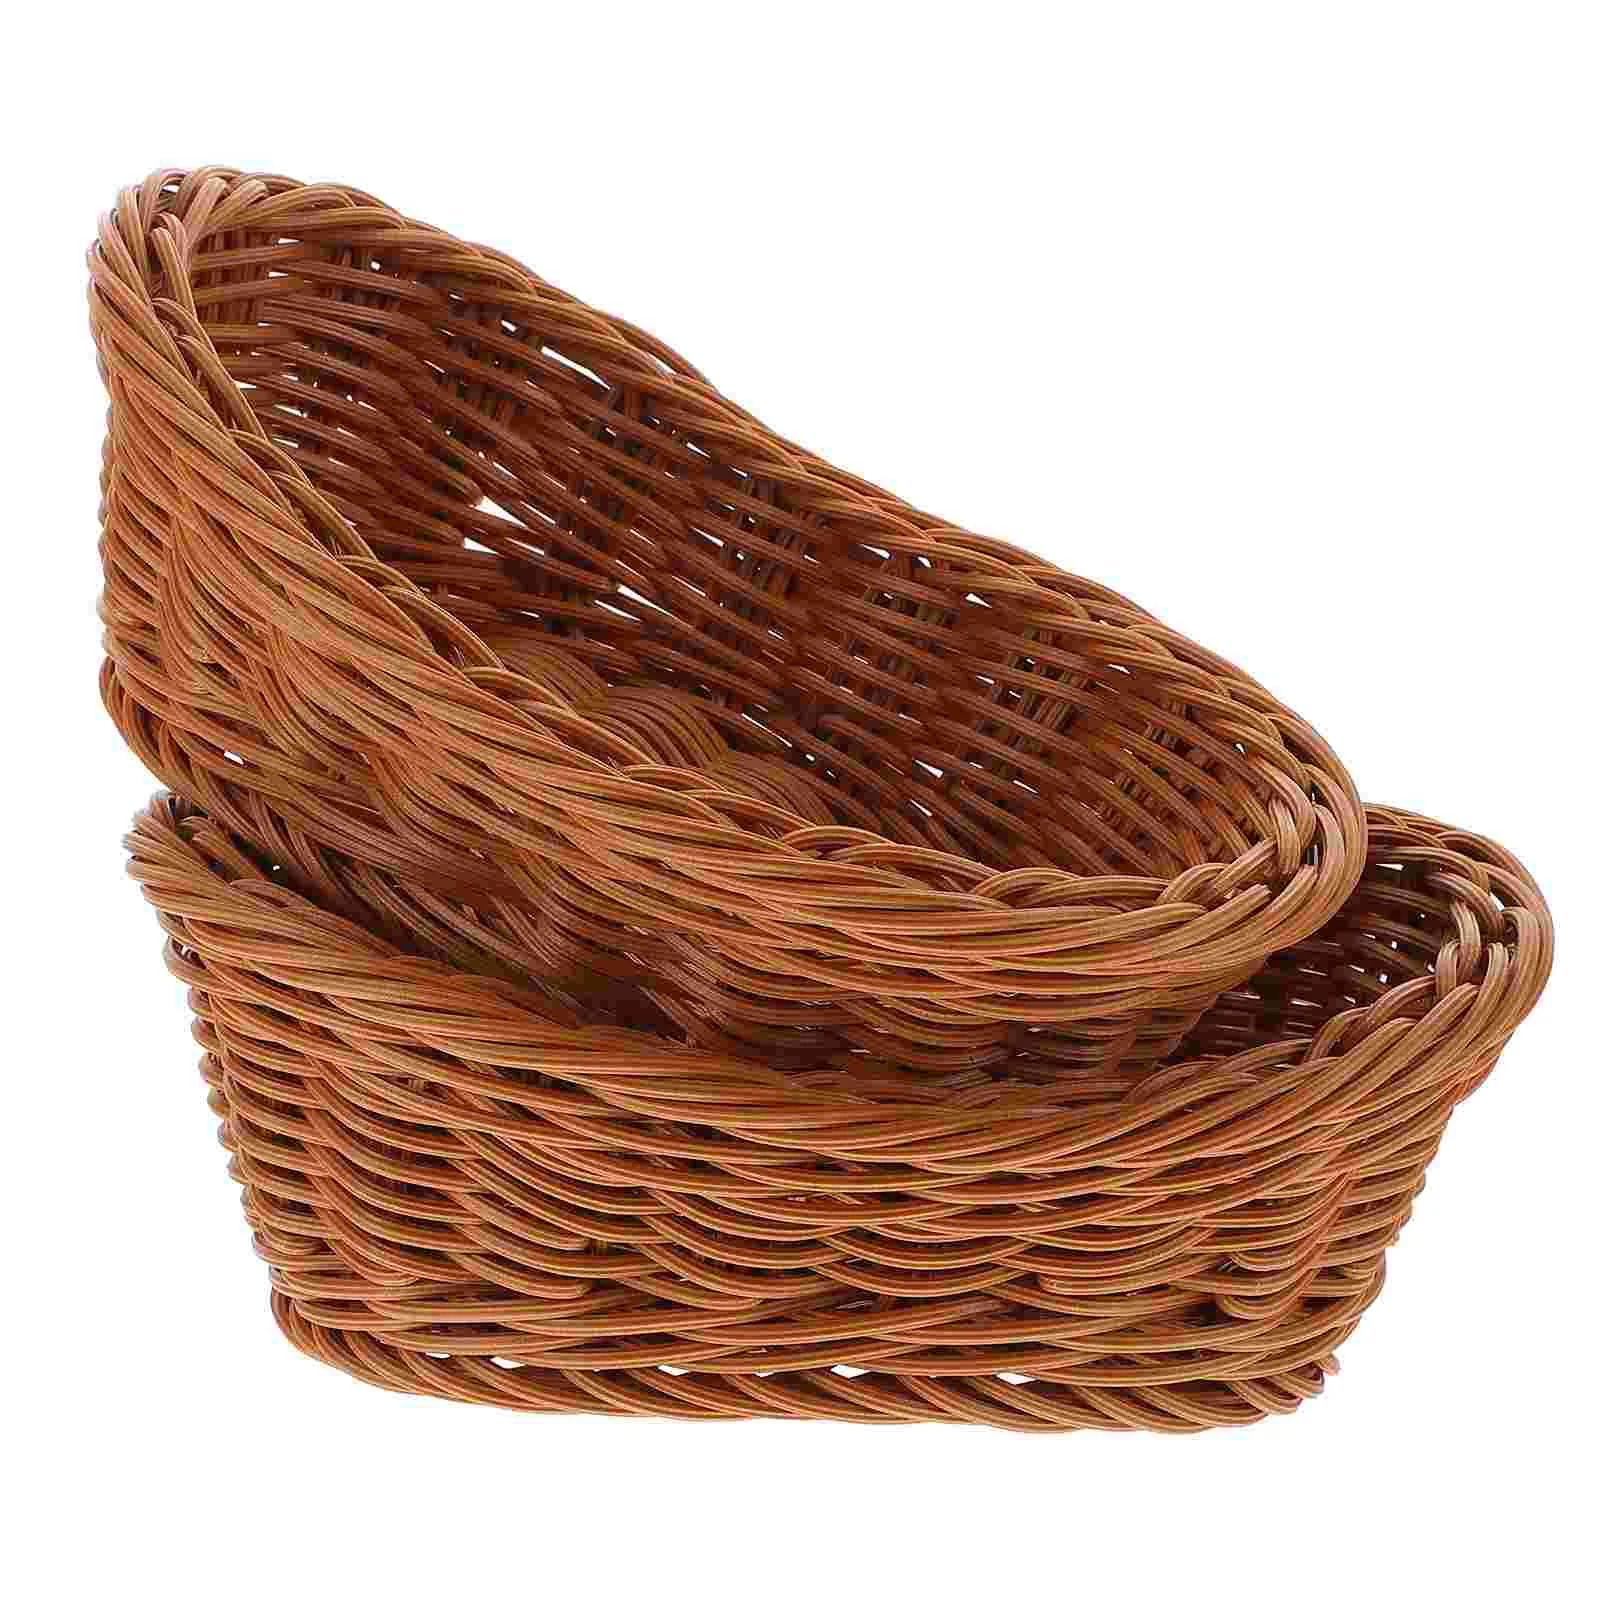 

Basket Bread Wicker Serving Woven Baskets Fruitrattan Oval Tray Storage Sushiplate Bowl Poly Snack Holder Platter Desktop Wooden